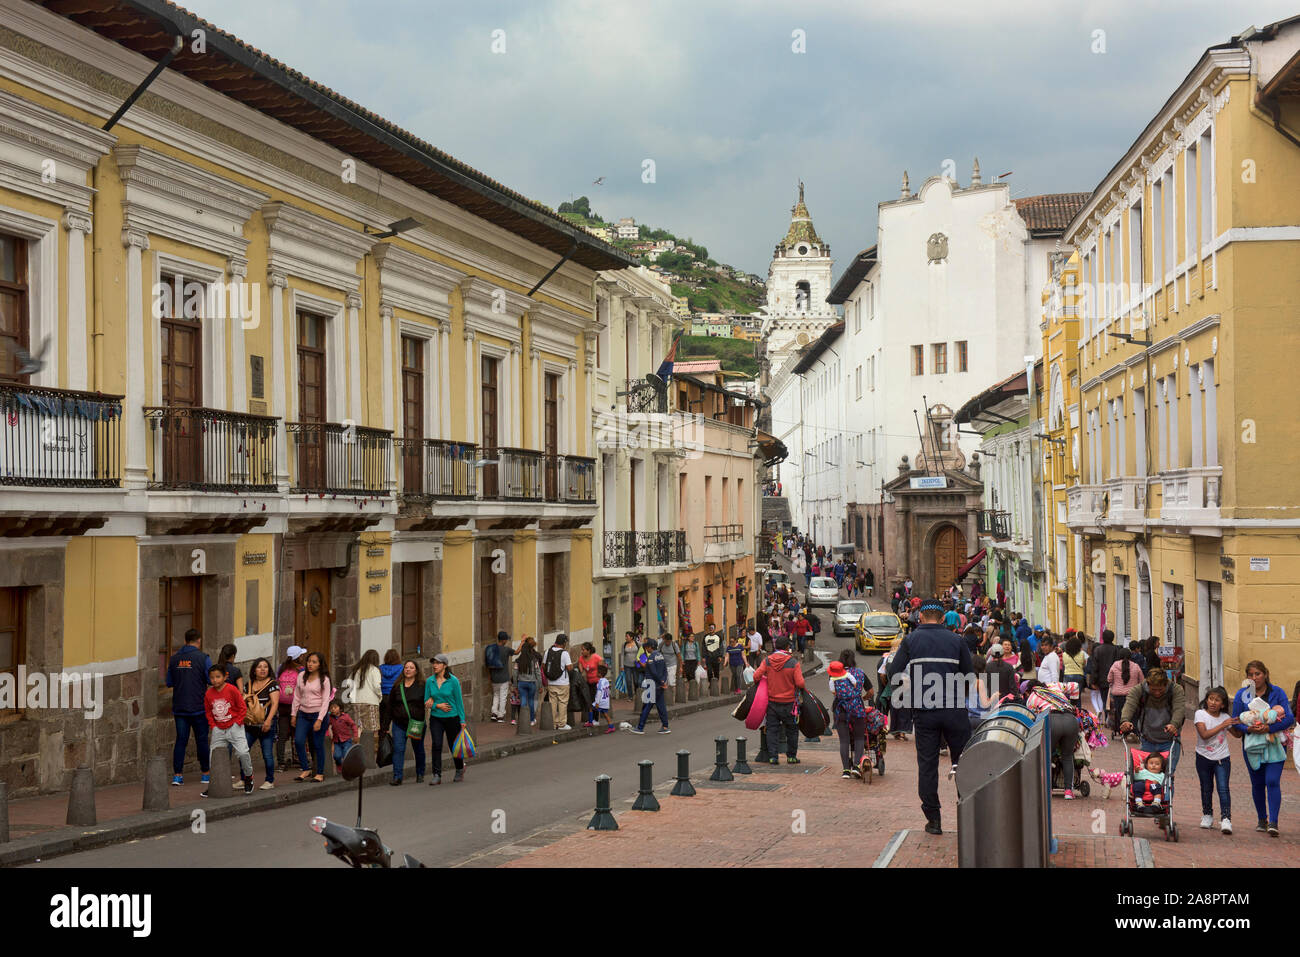 Colonial architecture in historic Old Town Quito, Ecuador Stock Photo